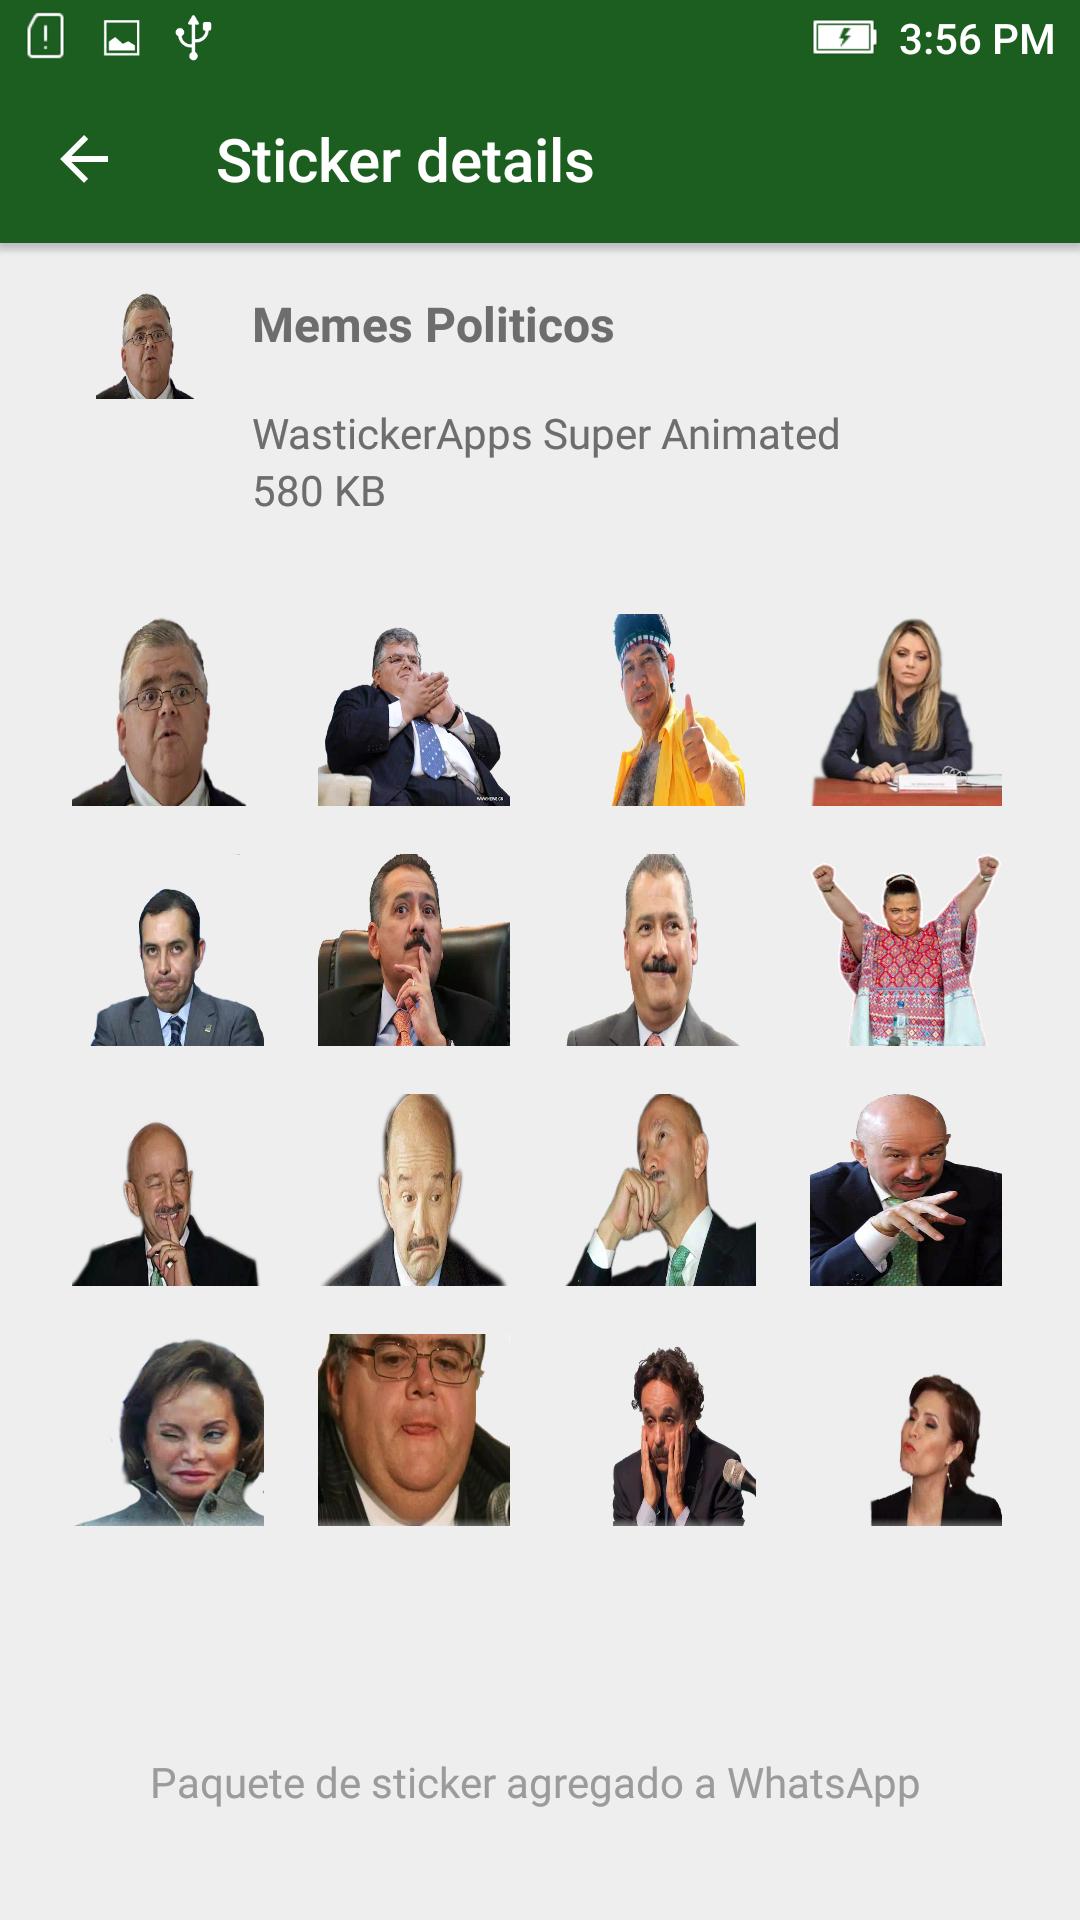 Xd83cxddf2xd83cxddfd Nuevos Stickers Graciosos Memes Mexico 2020 For Android Apk